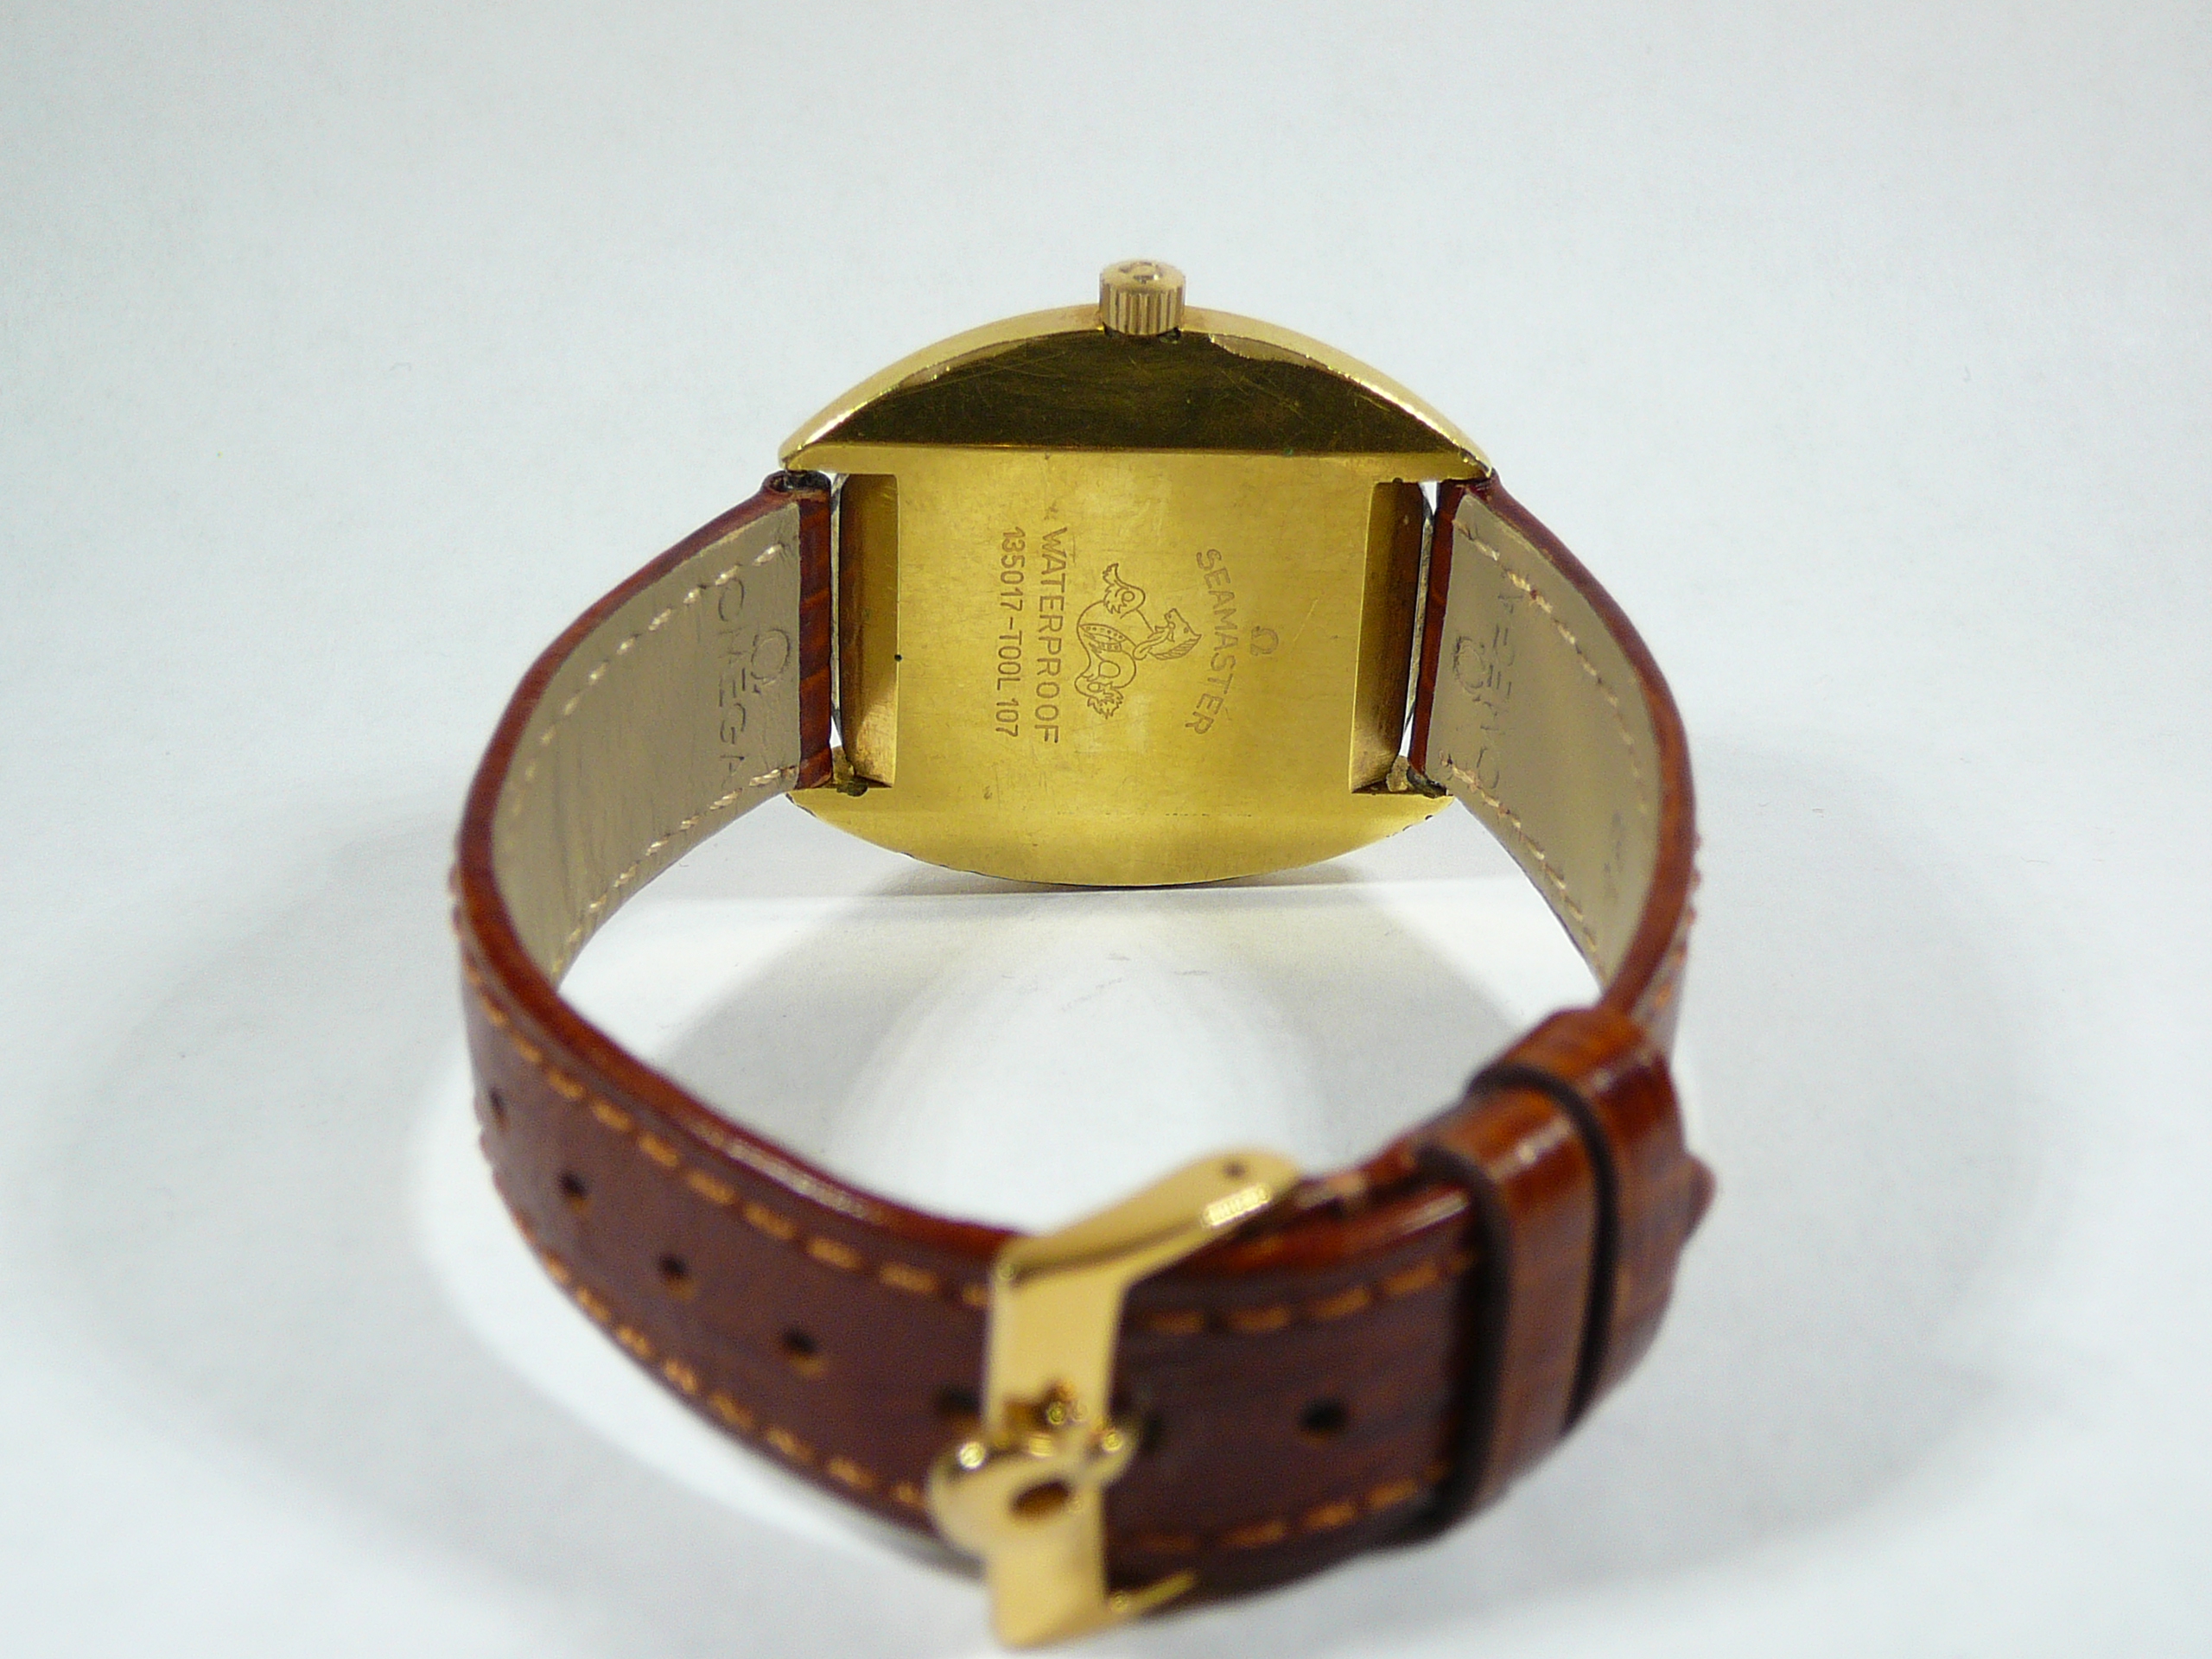 Gents Vintage Omega Wrist Watch - Image 3 of 3